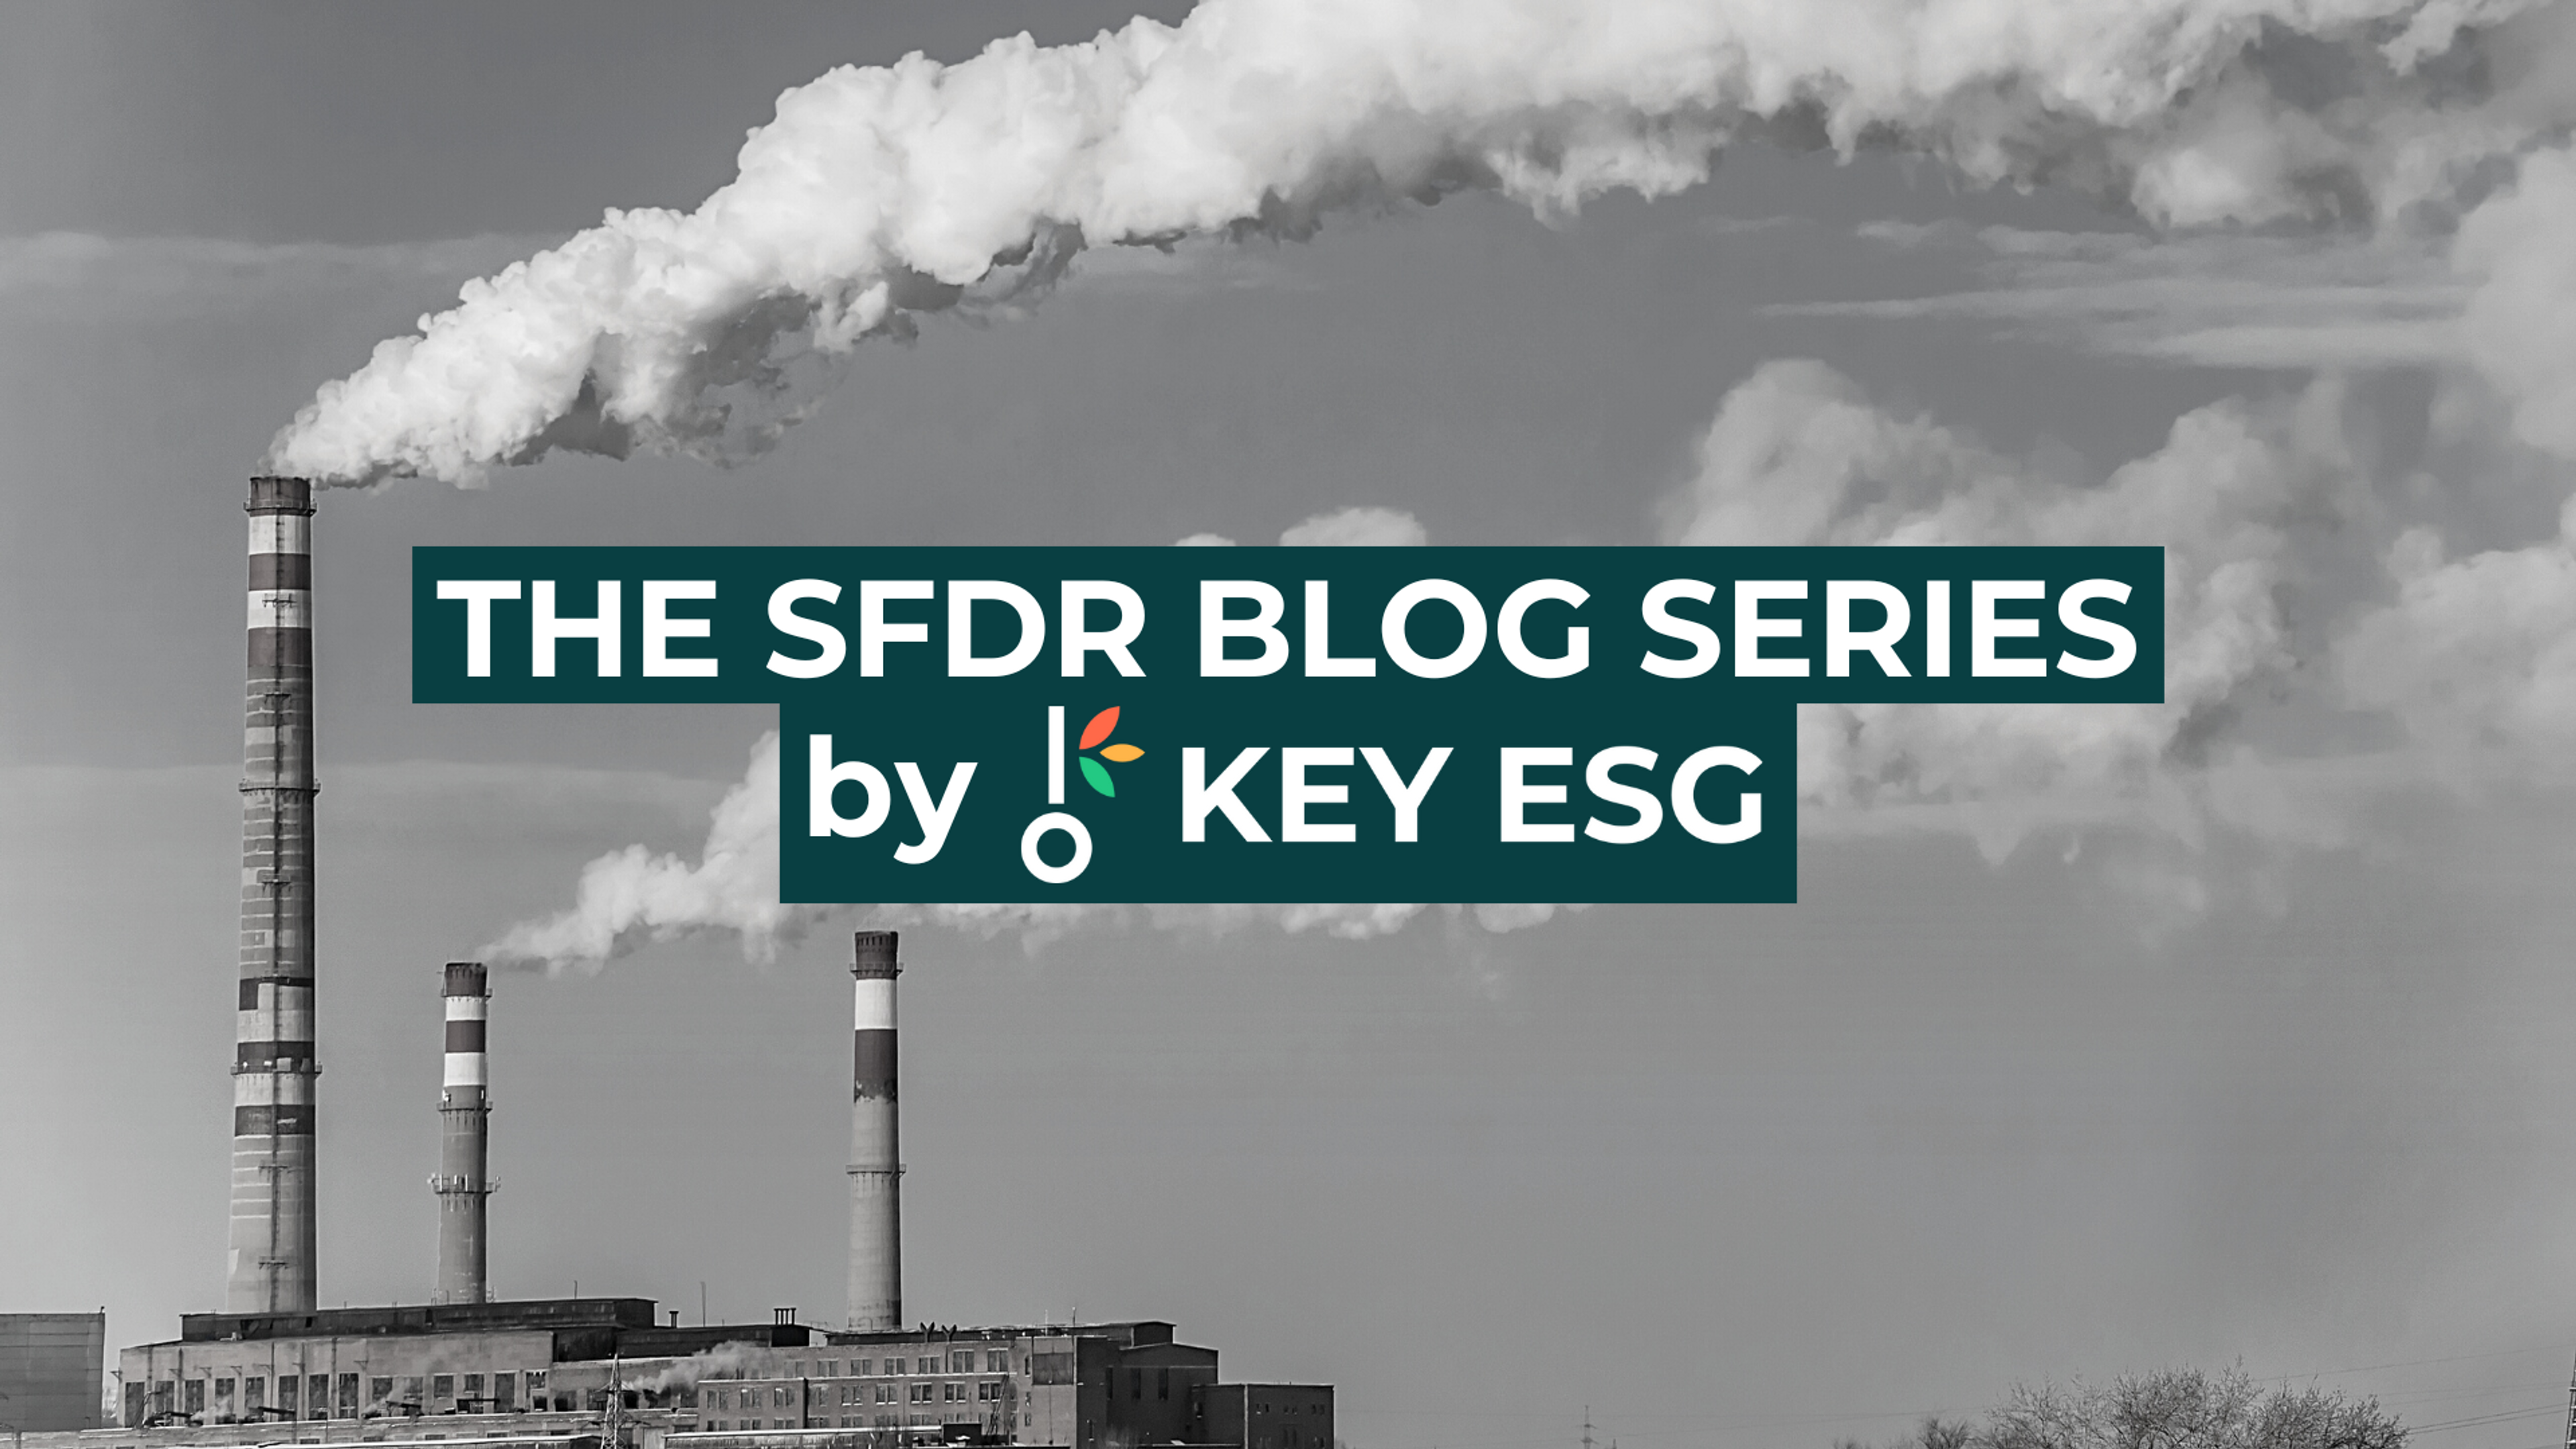 SFDR Blog Series: Introducing the Principal Adverse Impacts (PAIs)